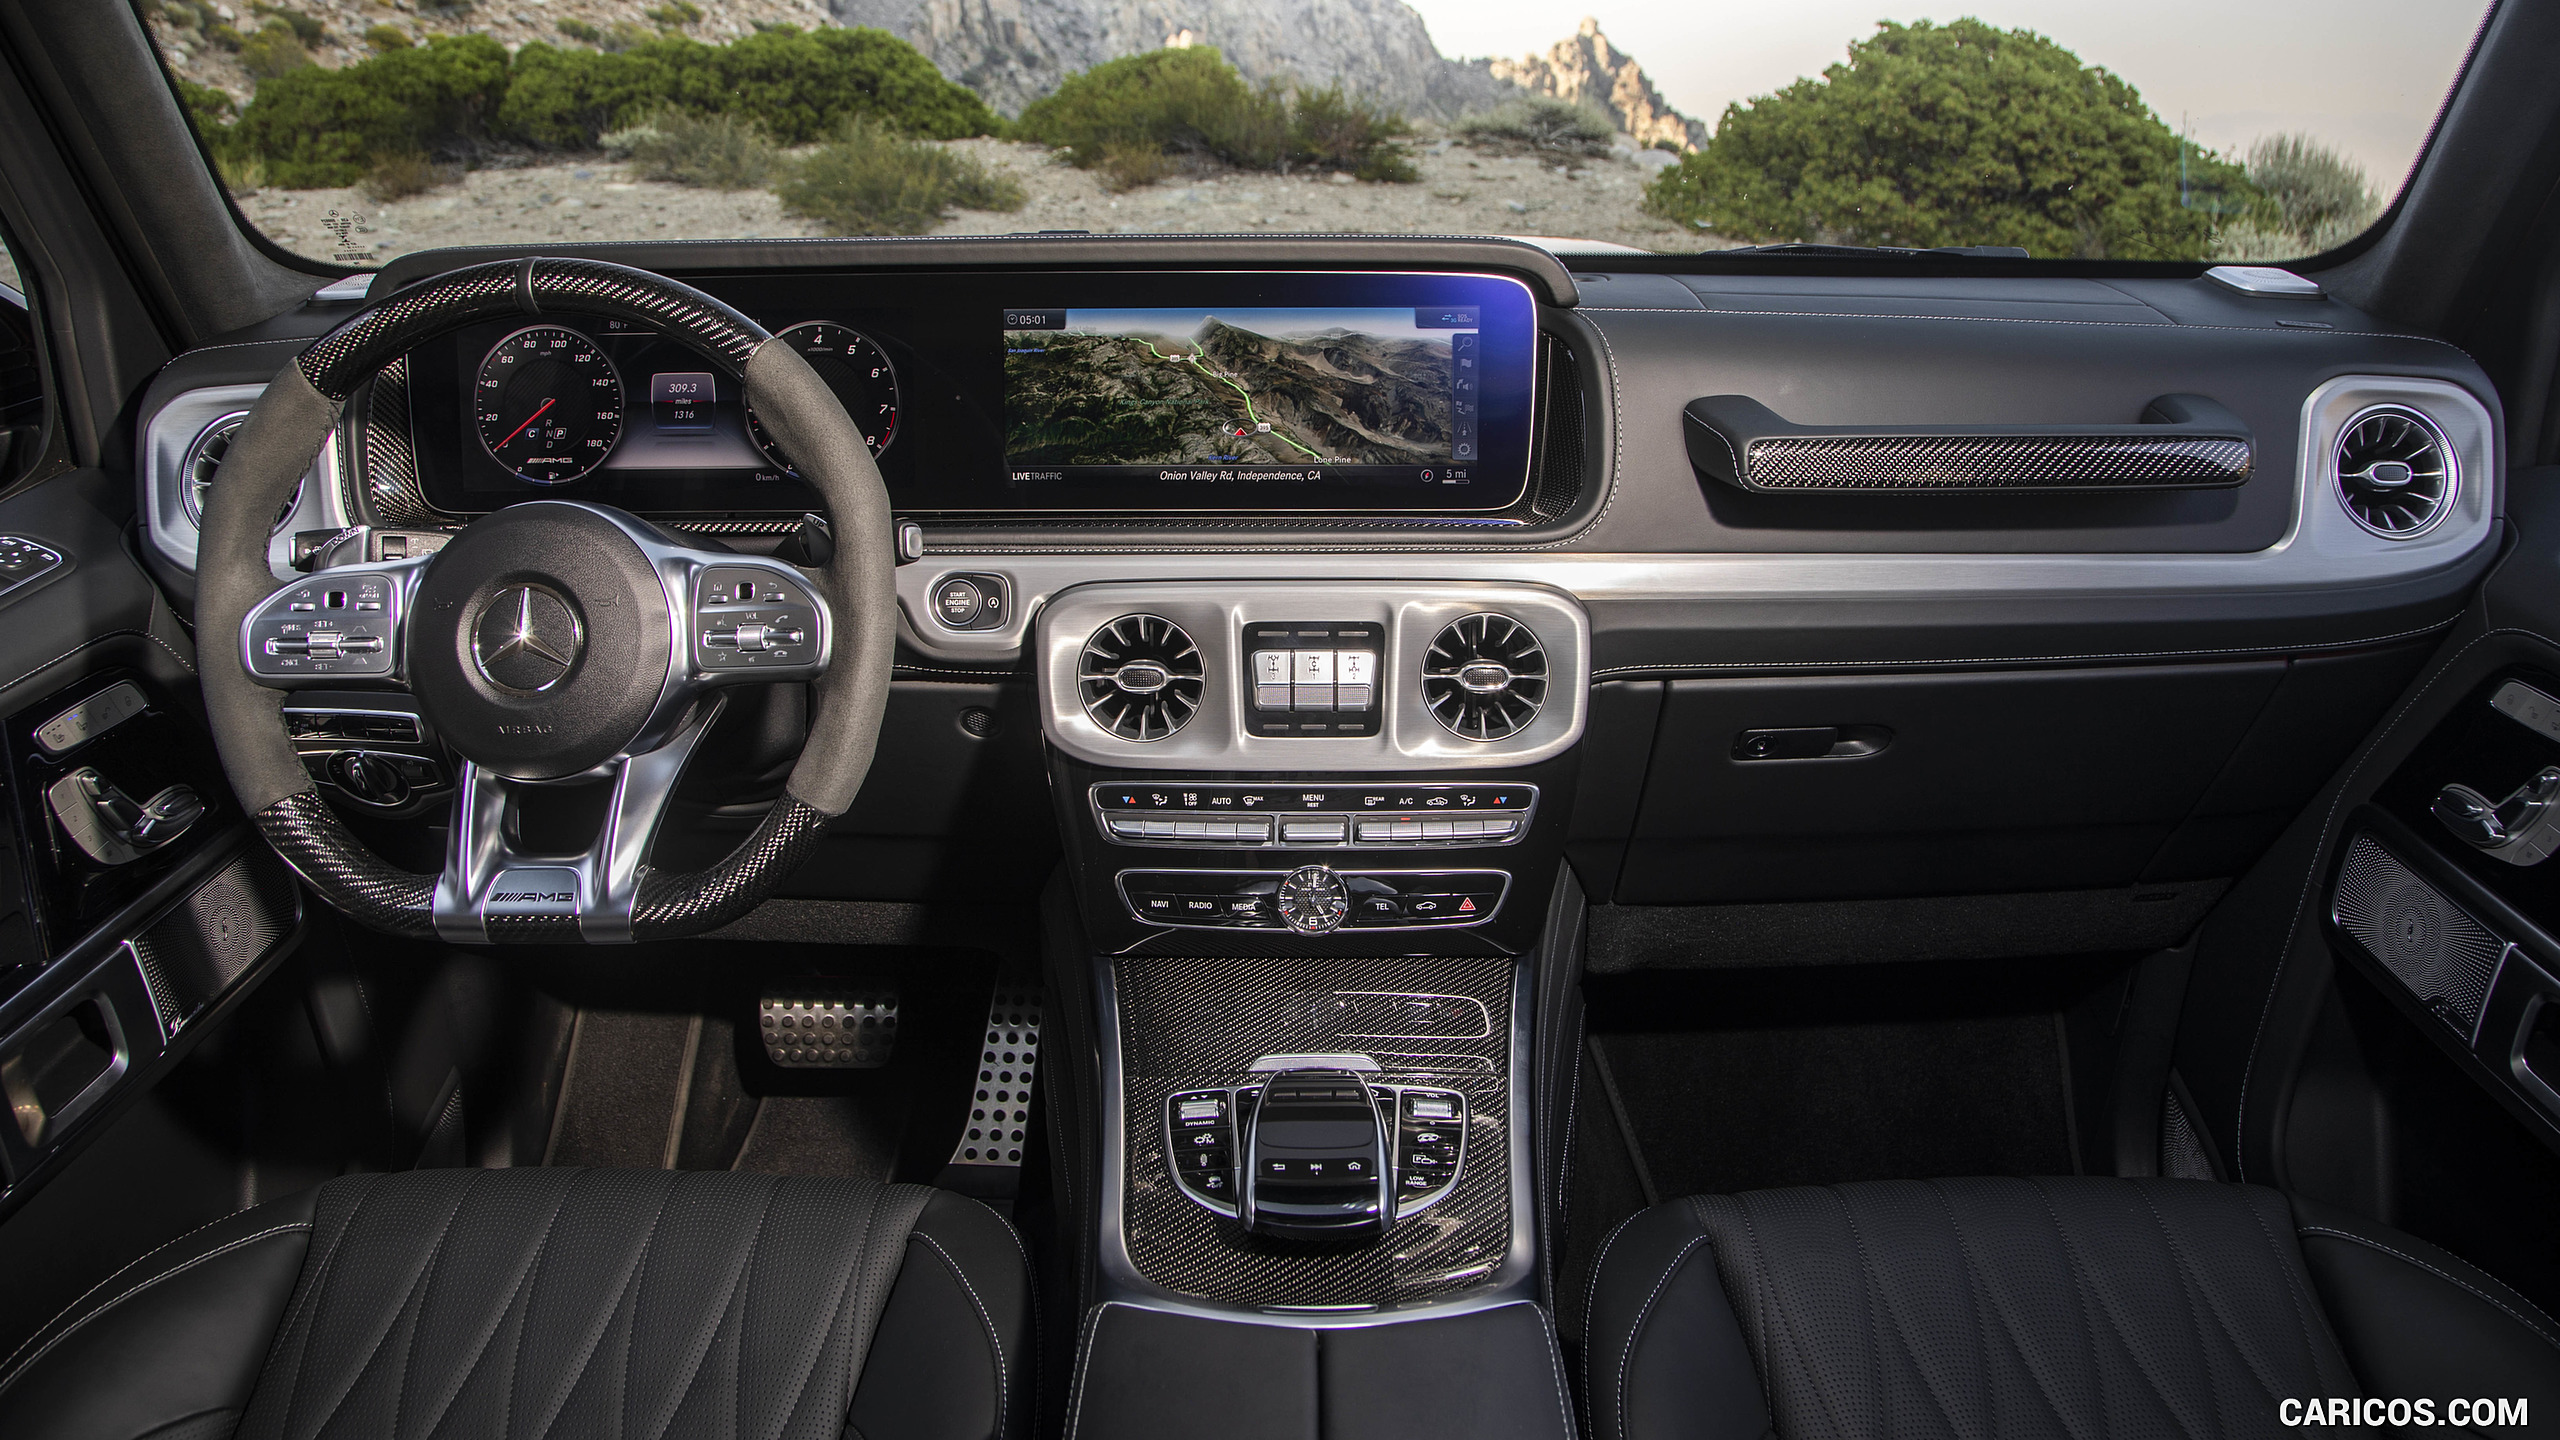 2019 Mercedes-AMG G63 (U.S.-Spec) - Interior, Cockpit, #425 of 452